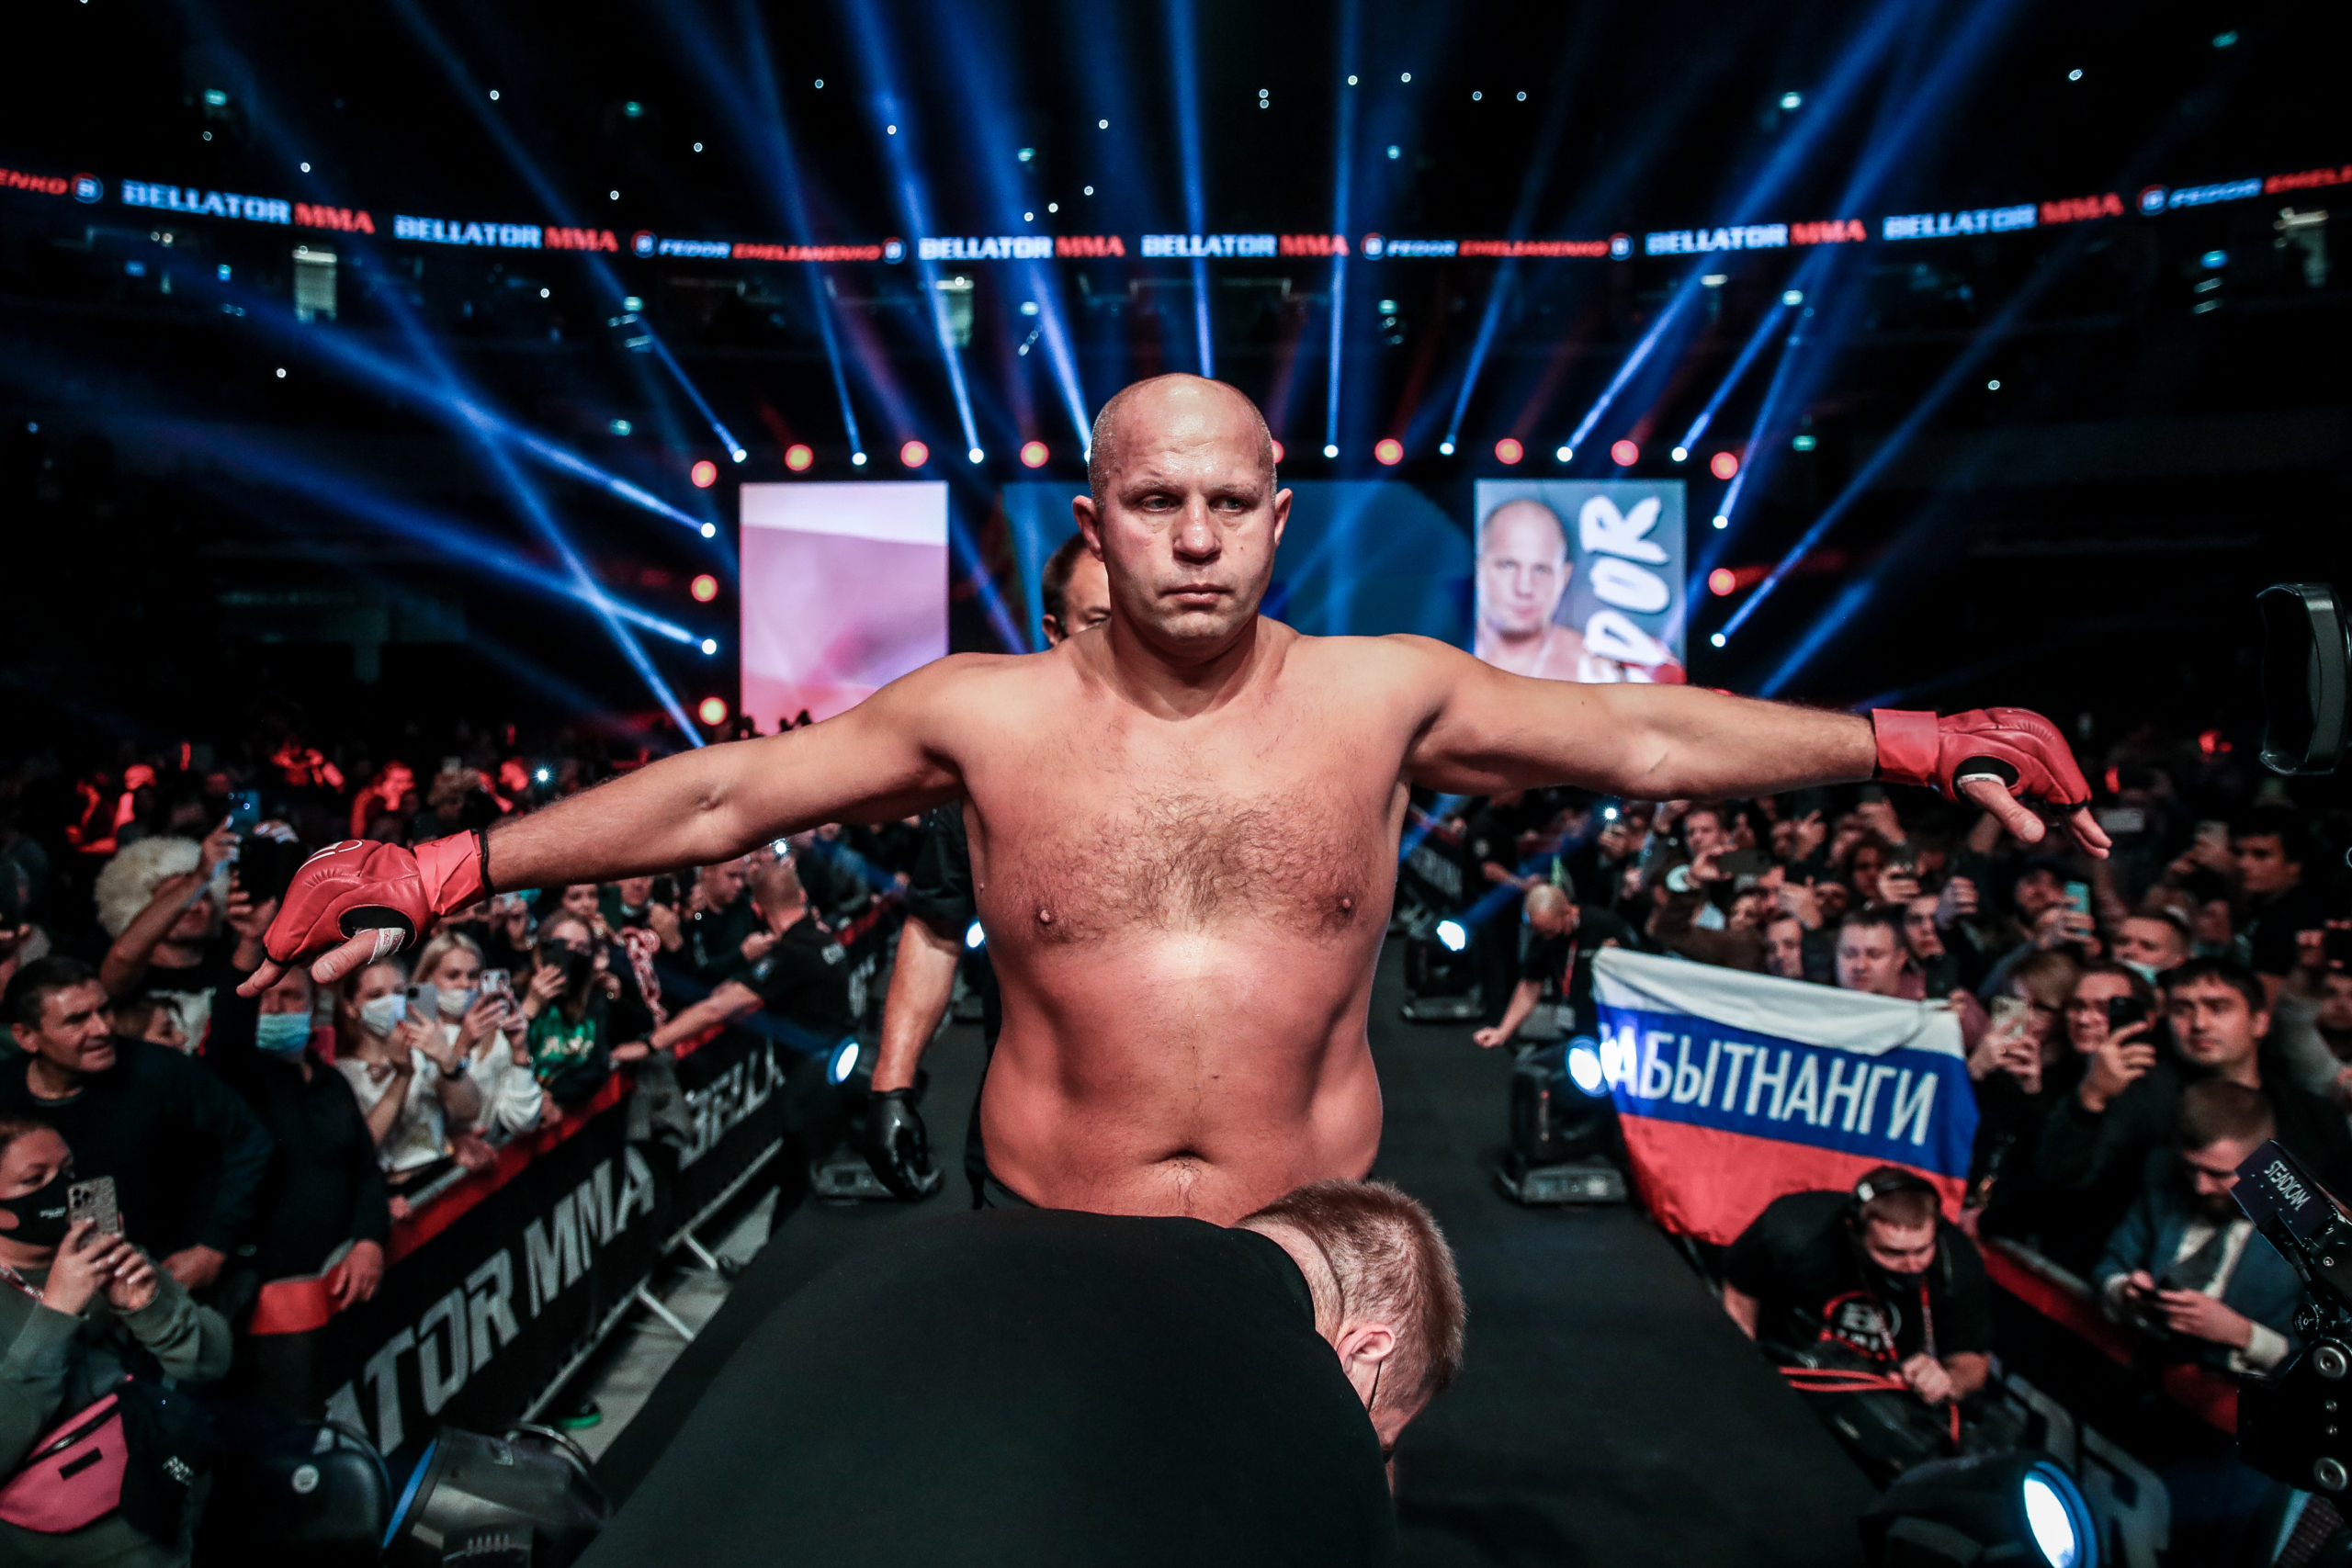 CBS brings Bellator MMA and Fedor Emelianenko to network TV in February